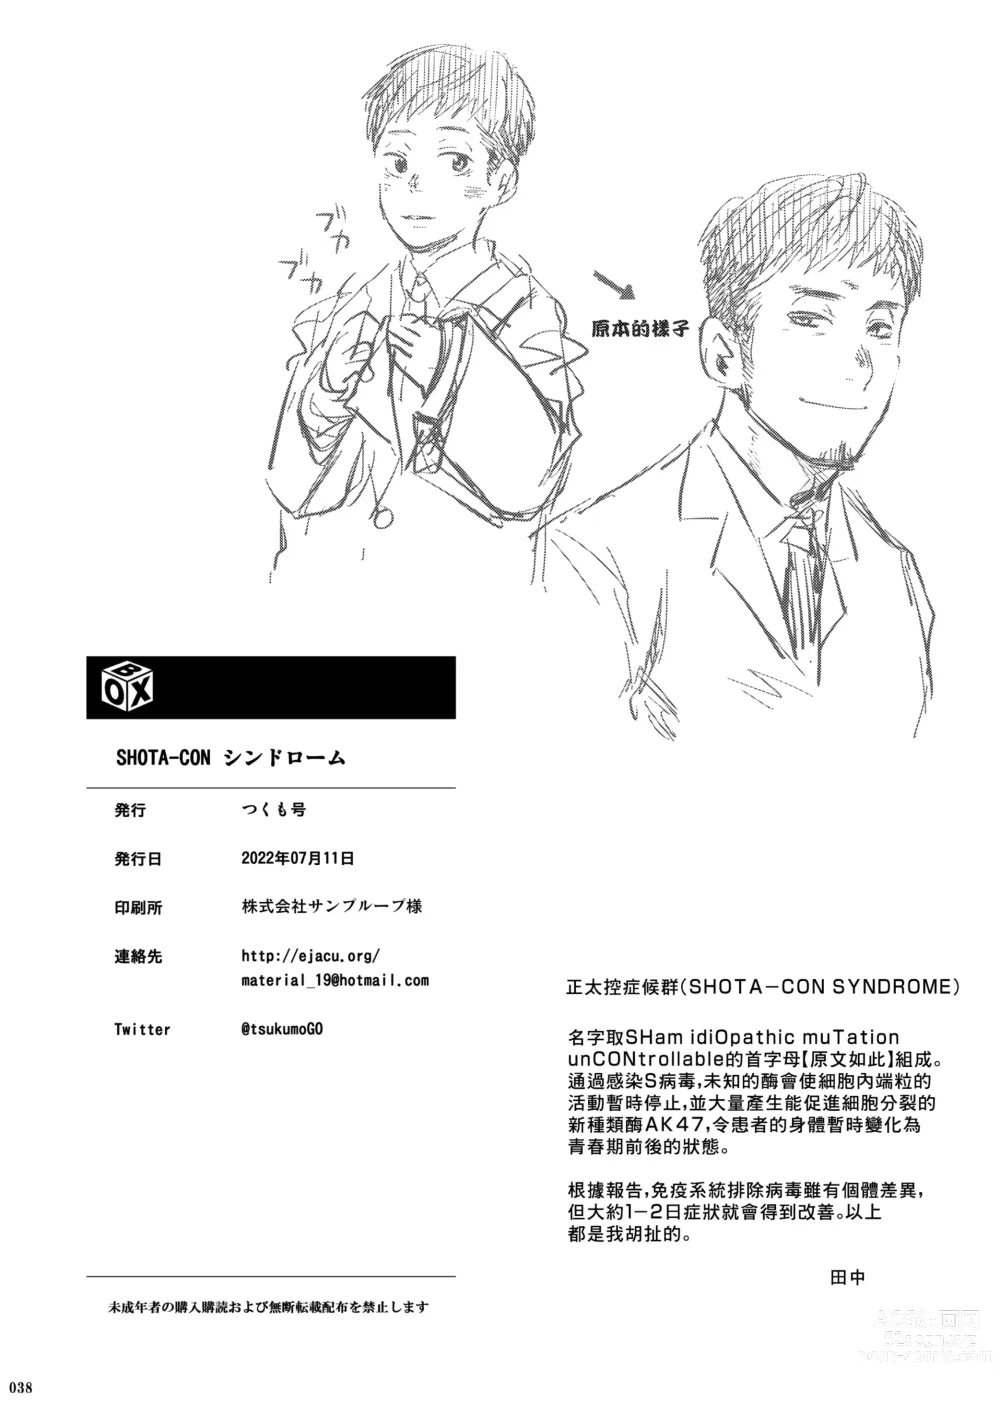 Page 37 of doujinshi SHOTA-CON syndrome